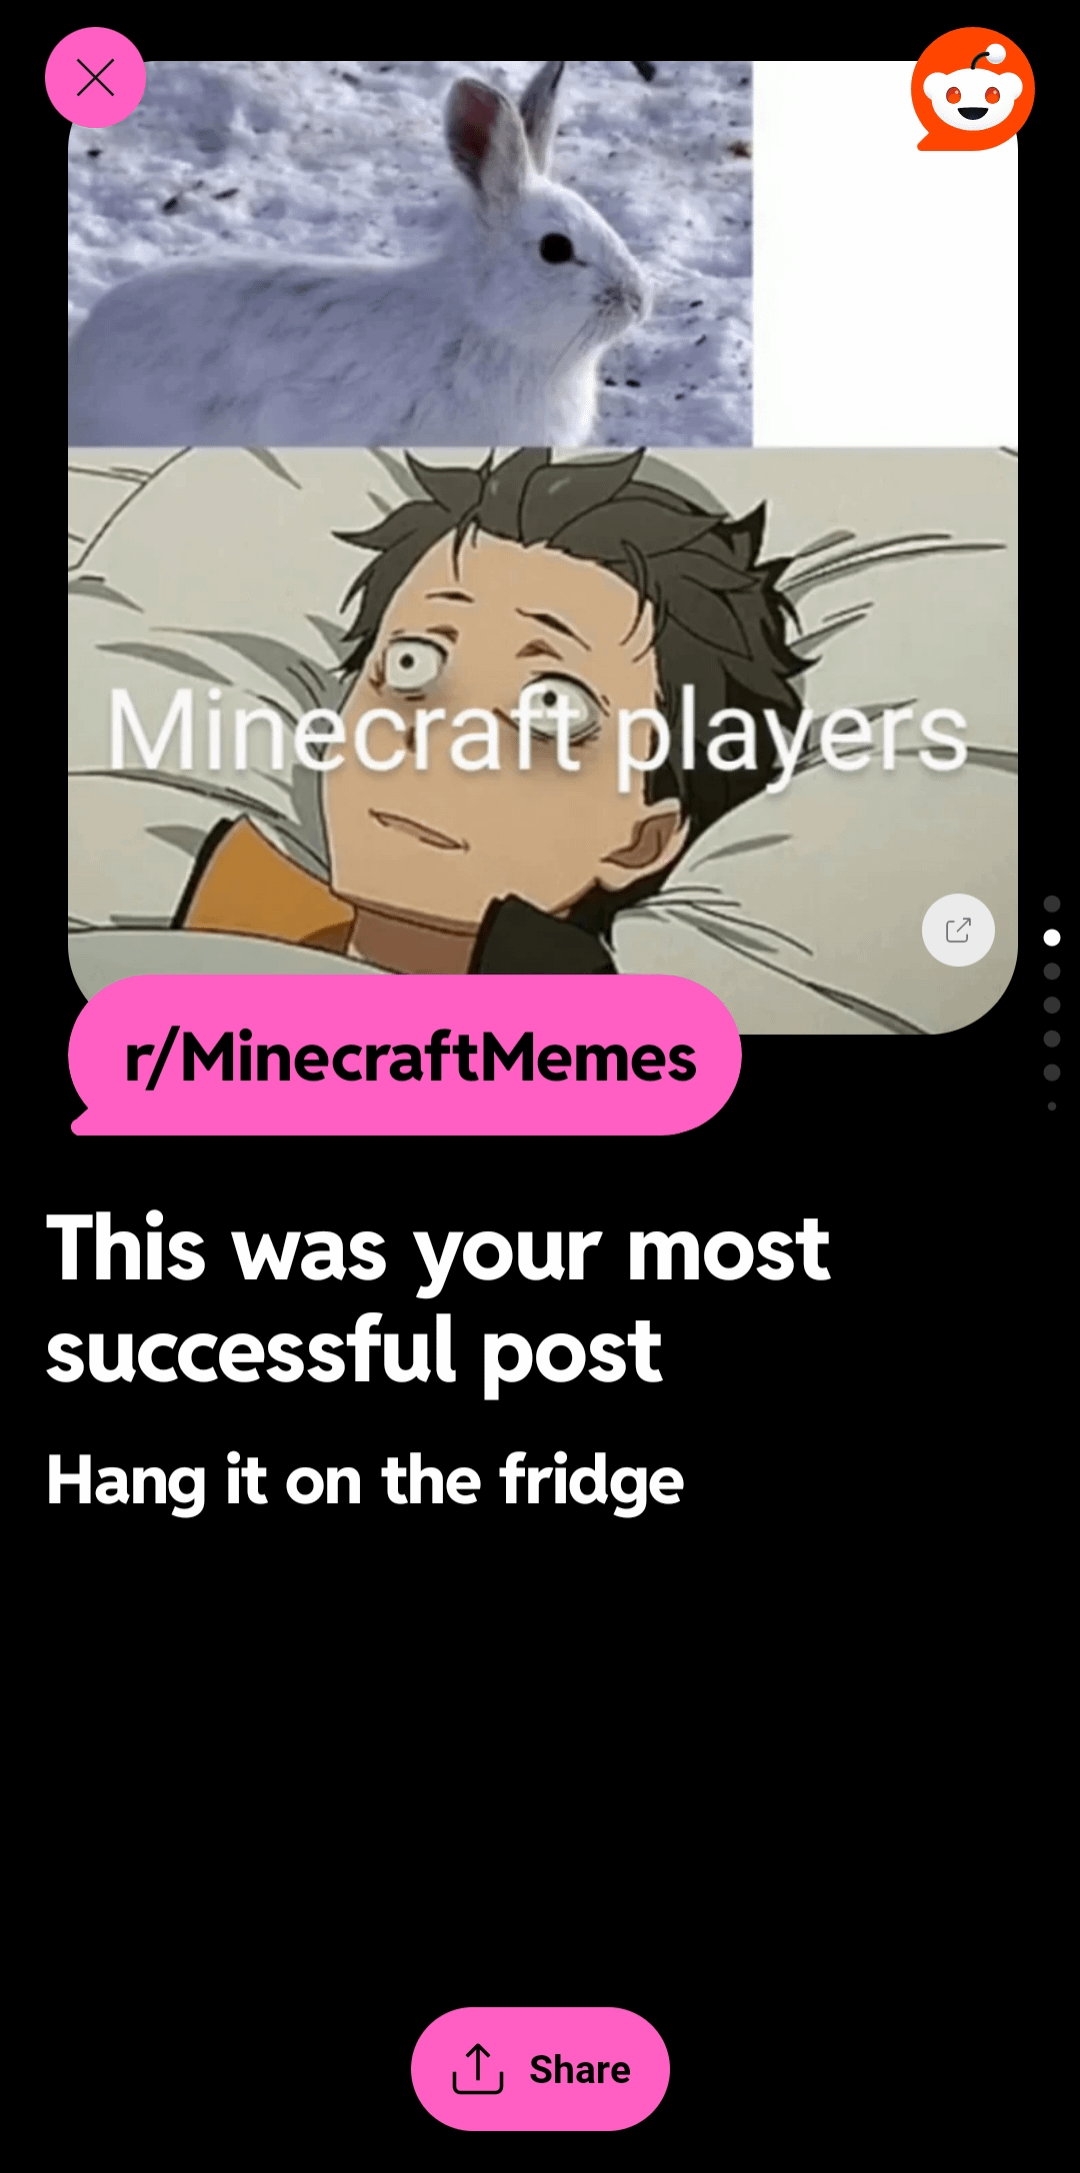 Minecraft Memes - "Causing PTSD in Minecraft was epic"